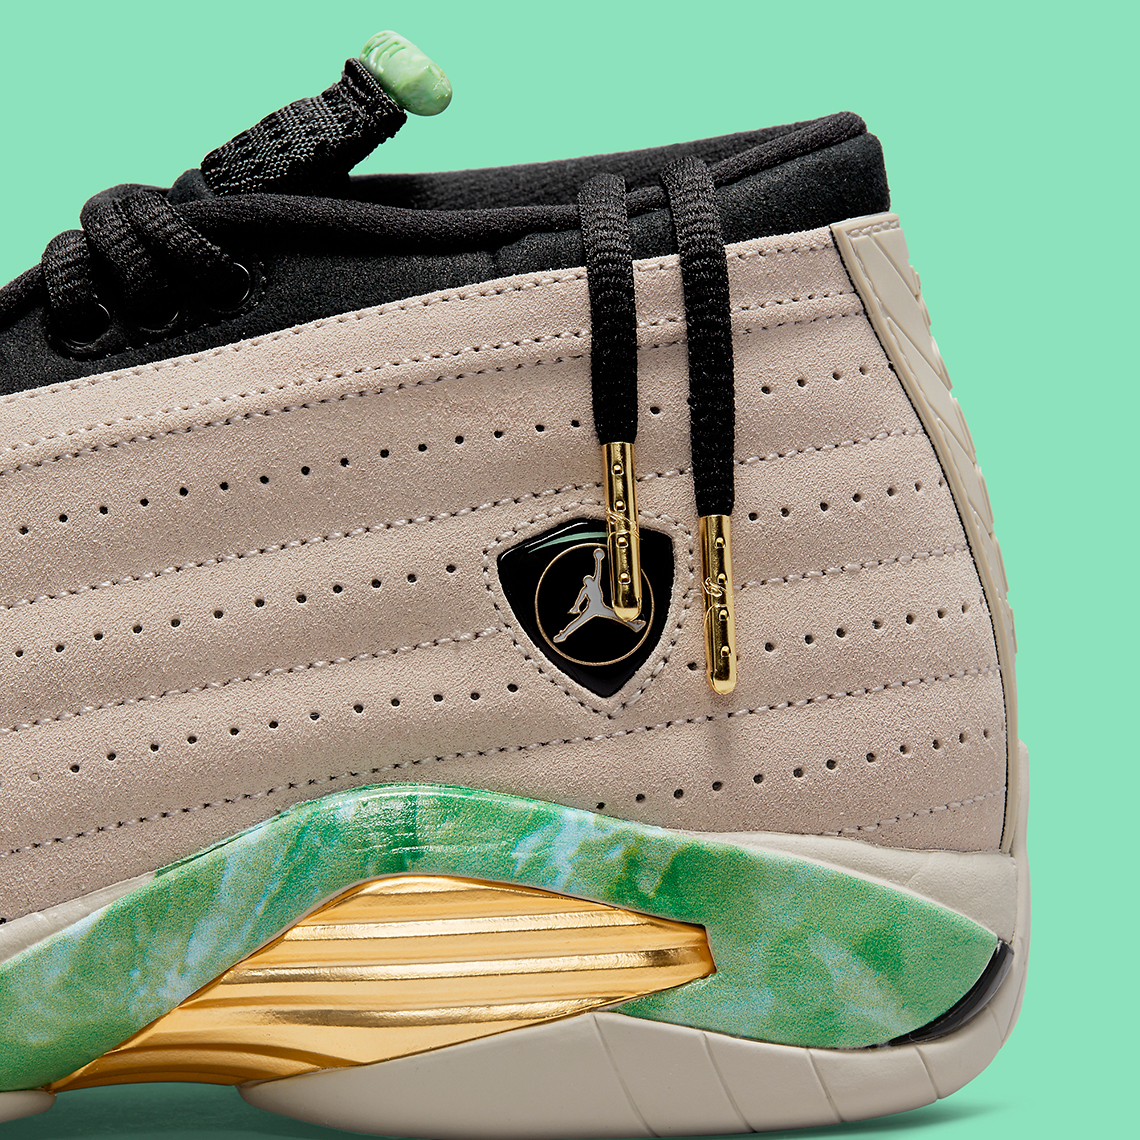 Air Jordan 13 Flint Shirts OMG Sneakers Low Aleali May Dj1034 200 Release Date 4